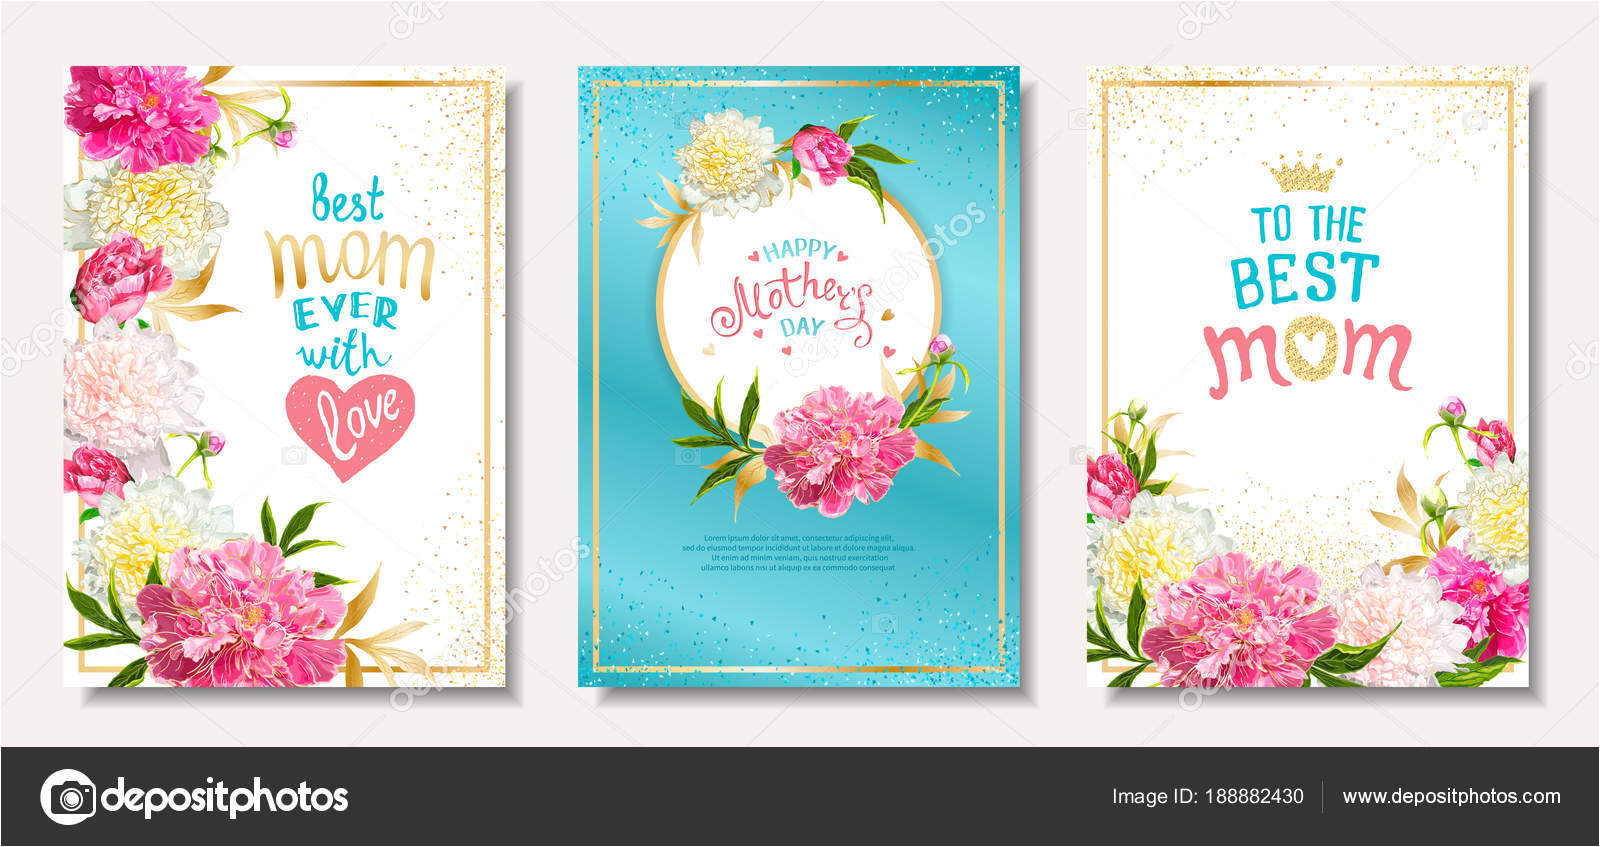 depositphotos 188882430 stock illustration set cards mothers day jpg